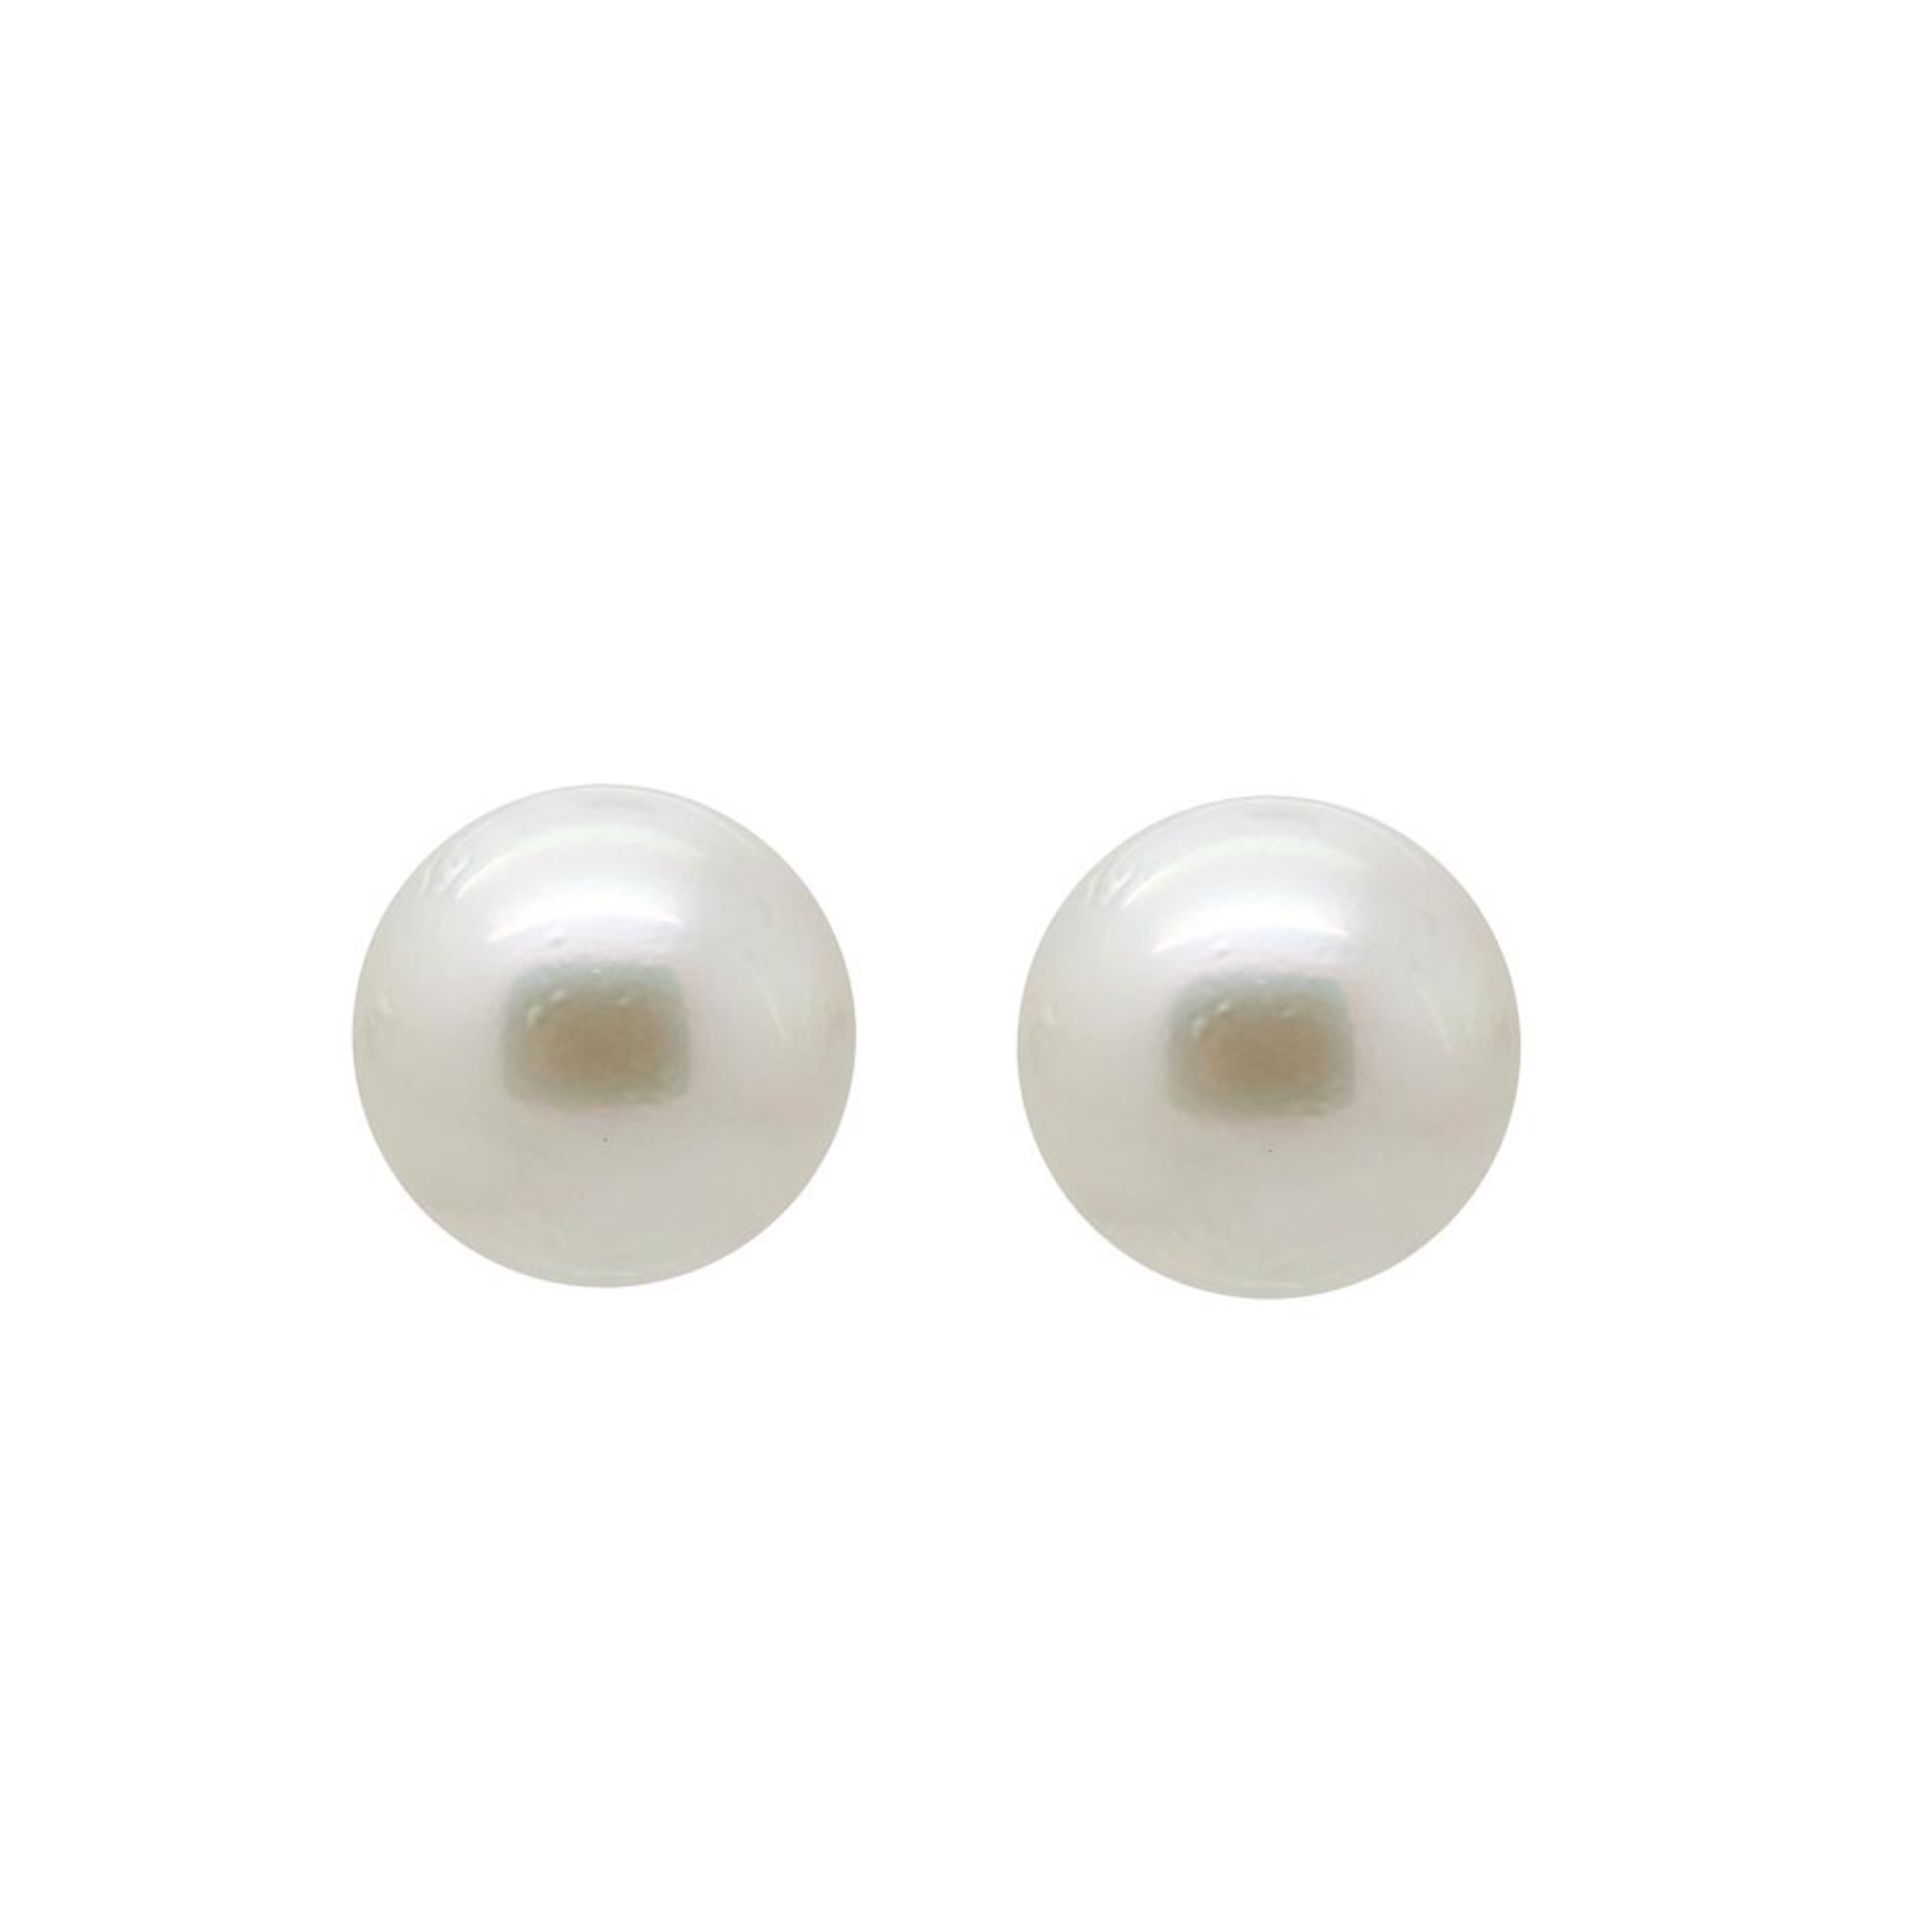 Gold and Australian pearl earrings